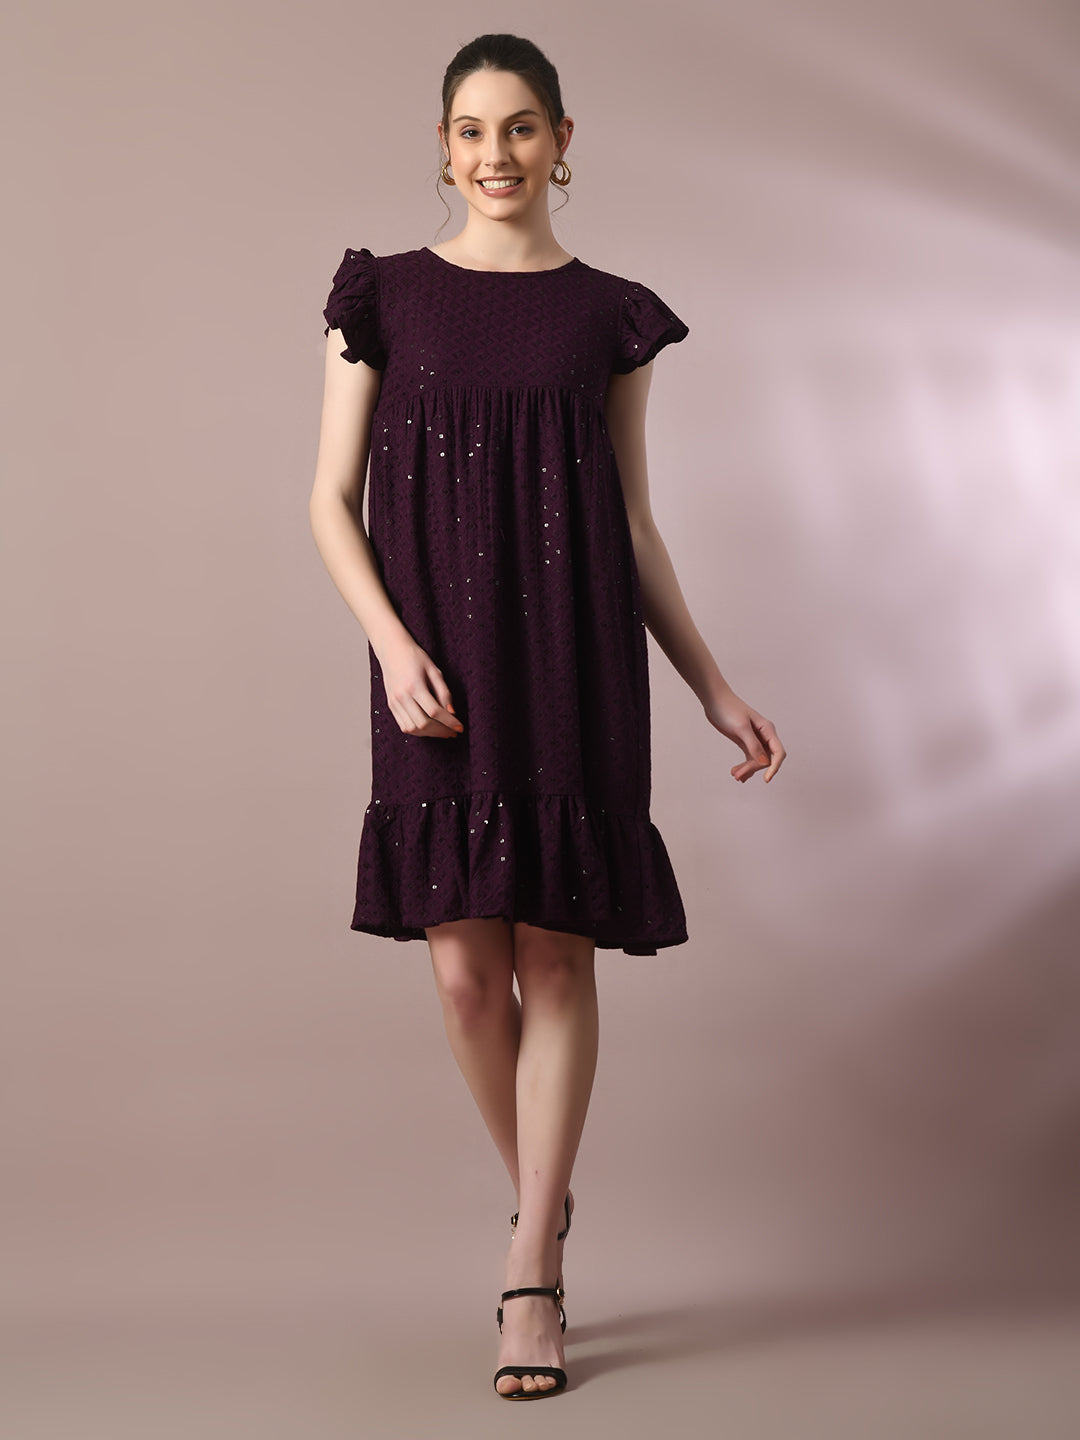 Women's  Violet Embroidered Cotton Round Neck A-Line Party Dress  - Myshka